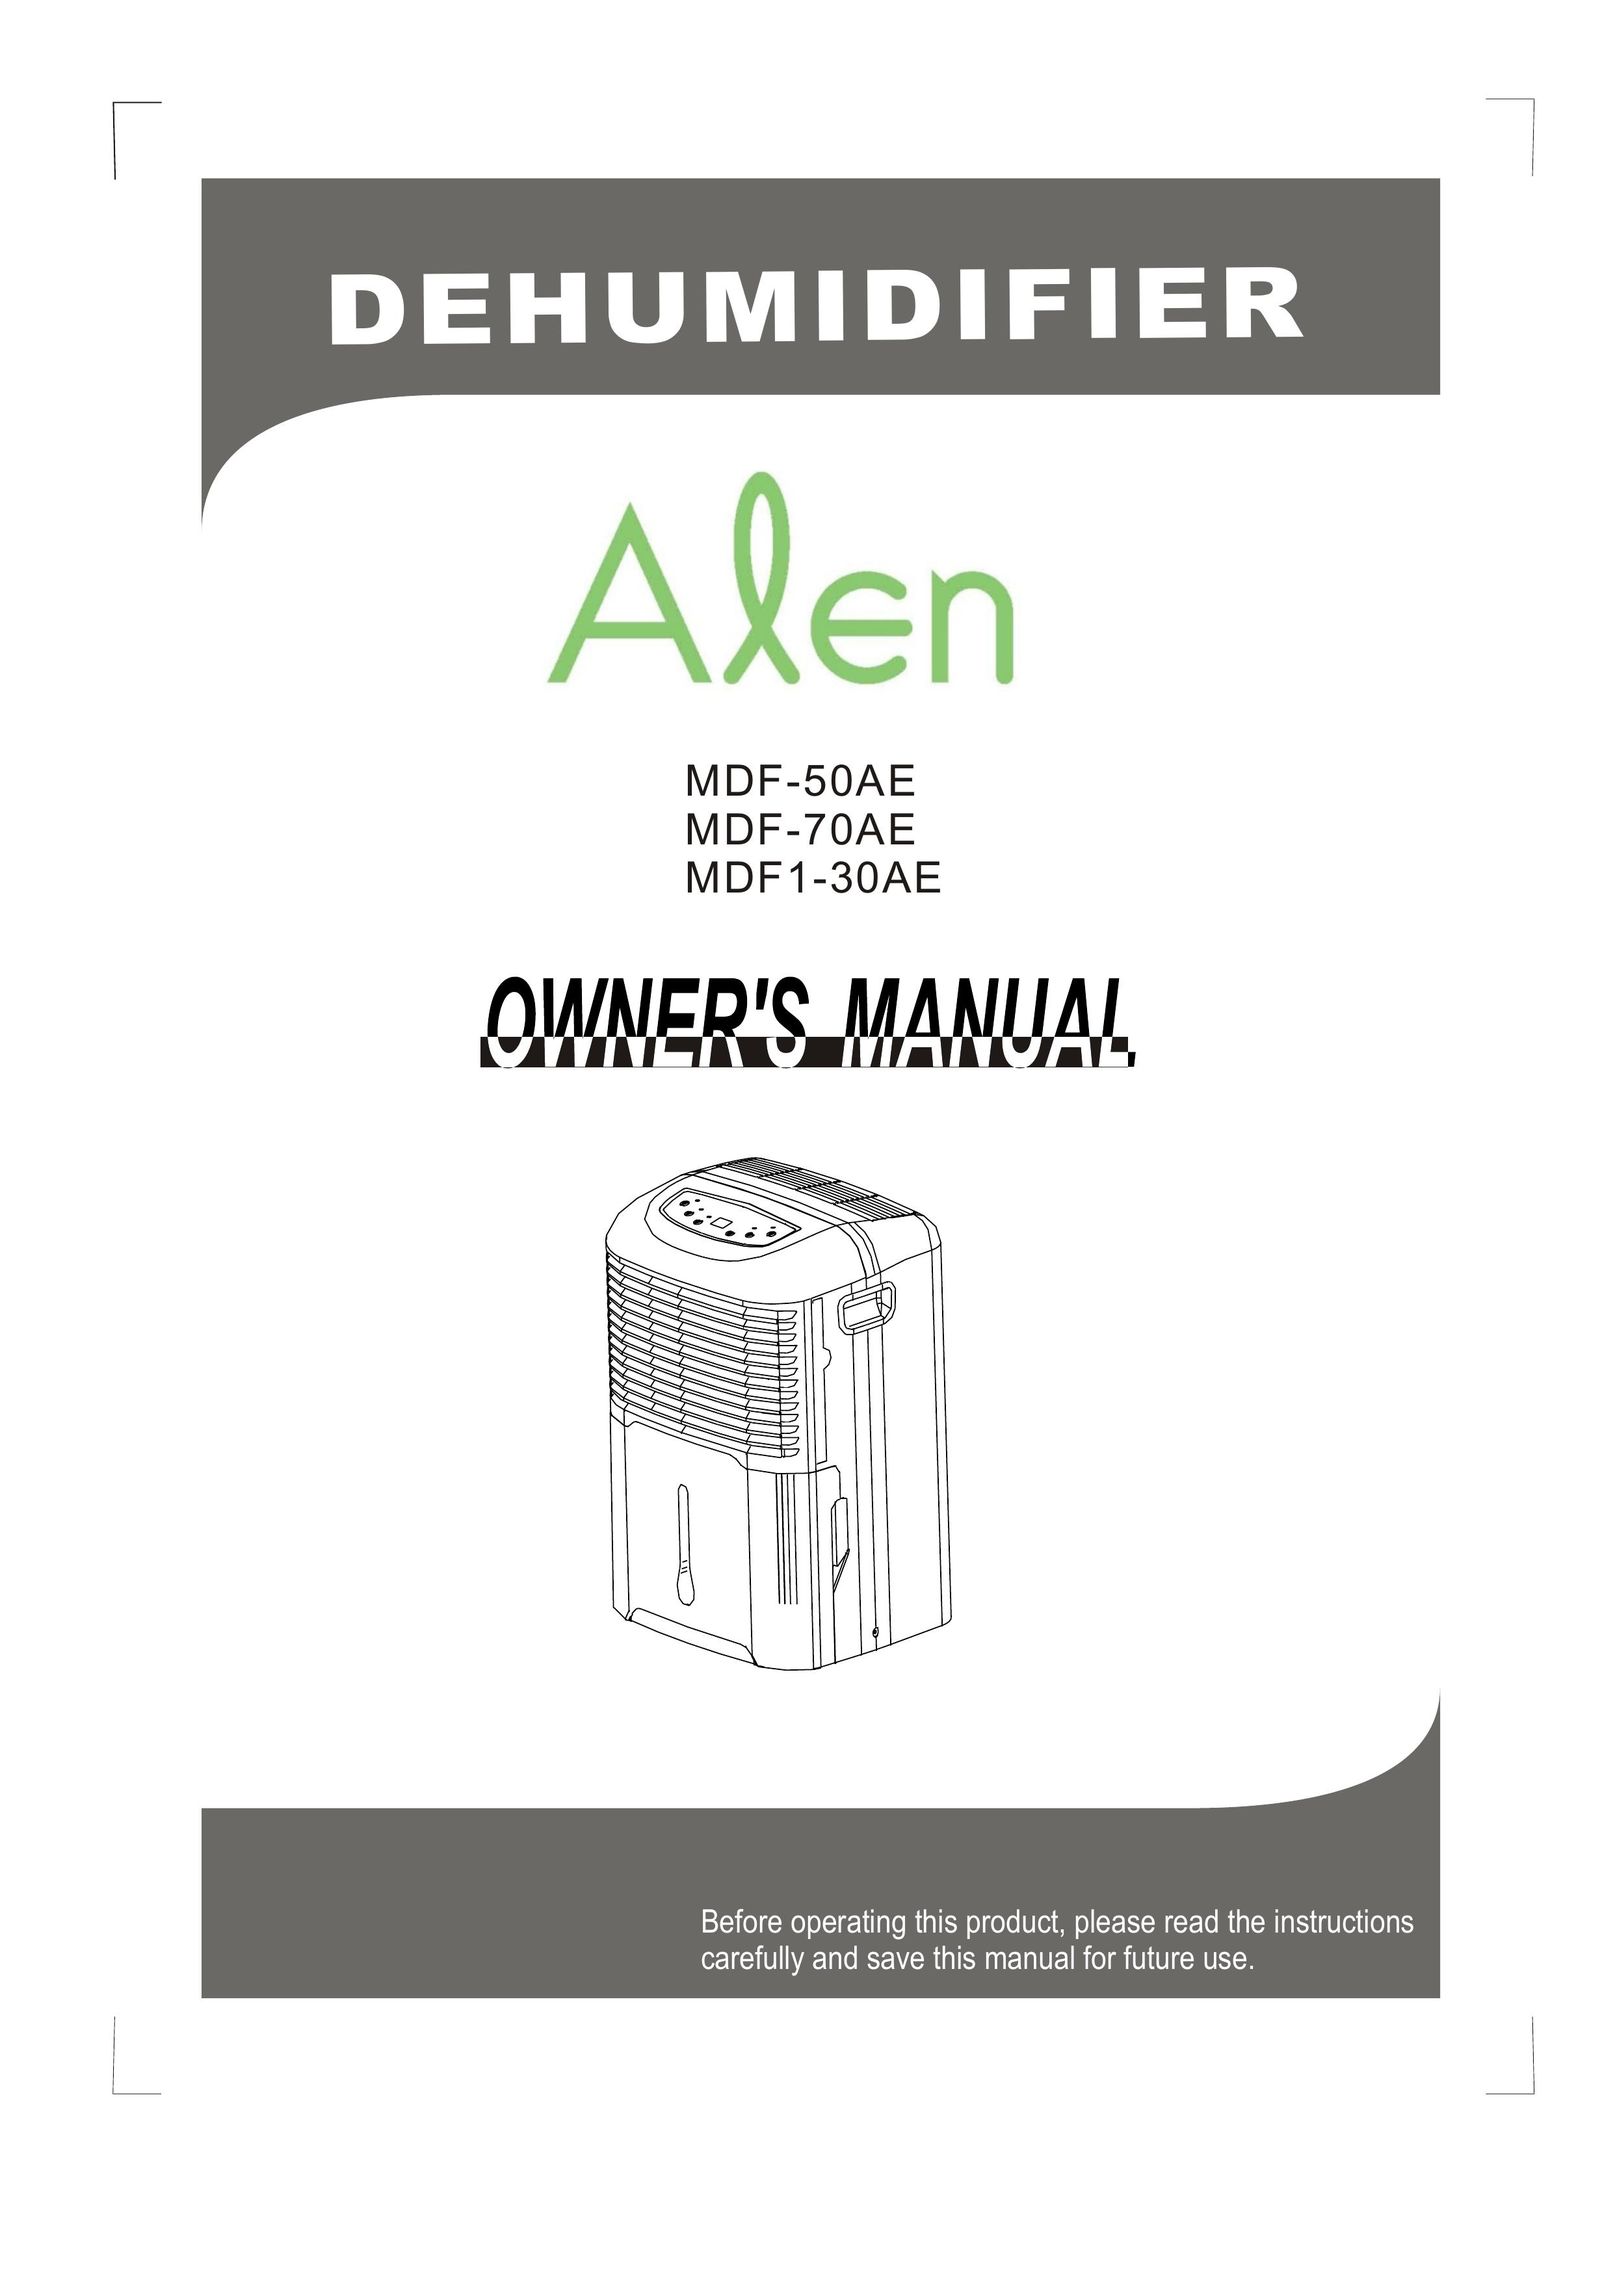 Alen MDF-50AE Dehumidifier User Manual